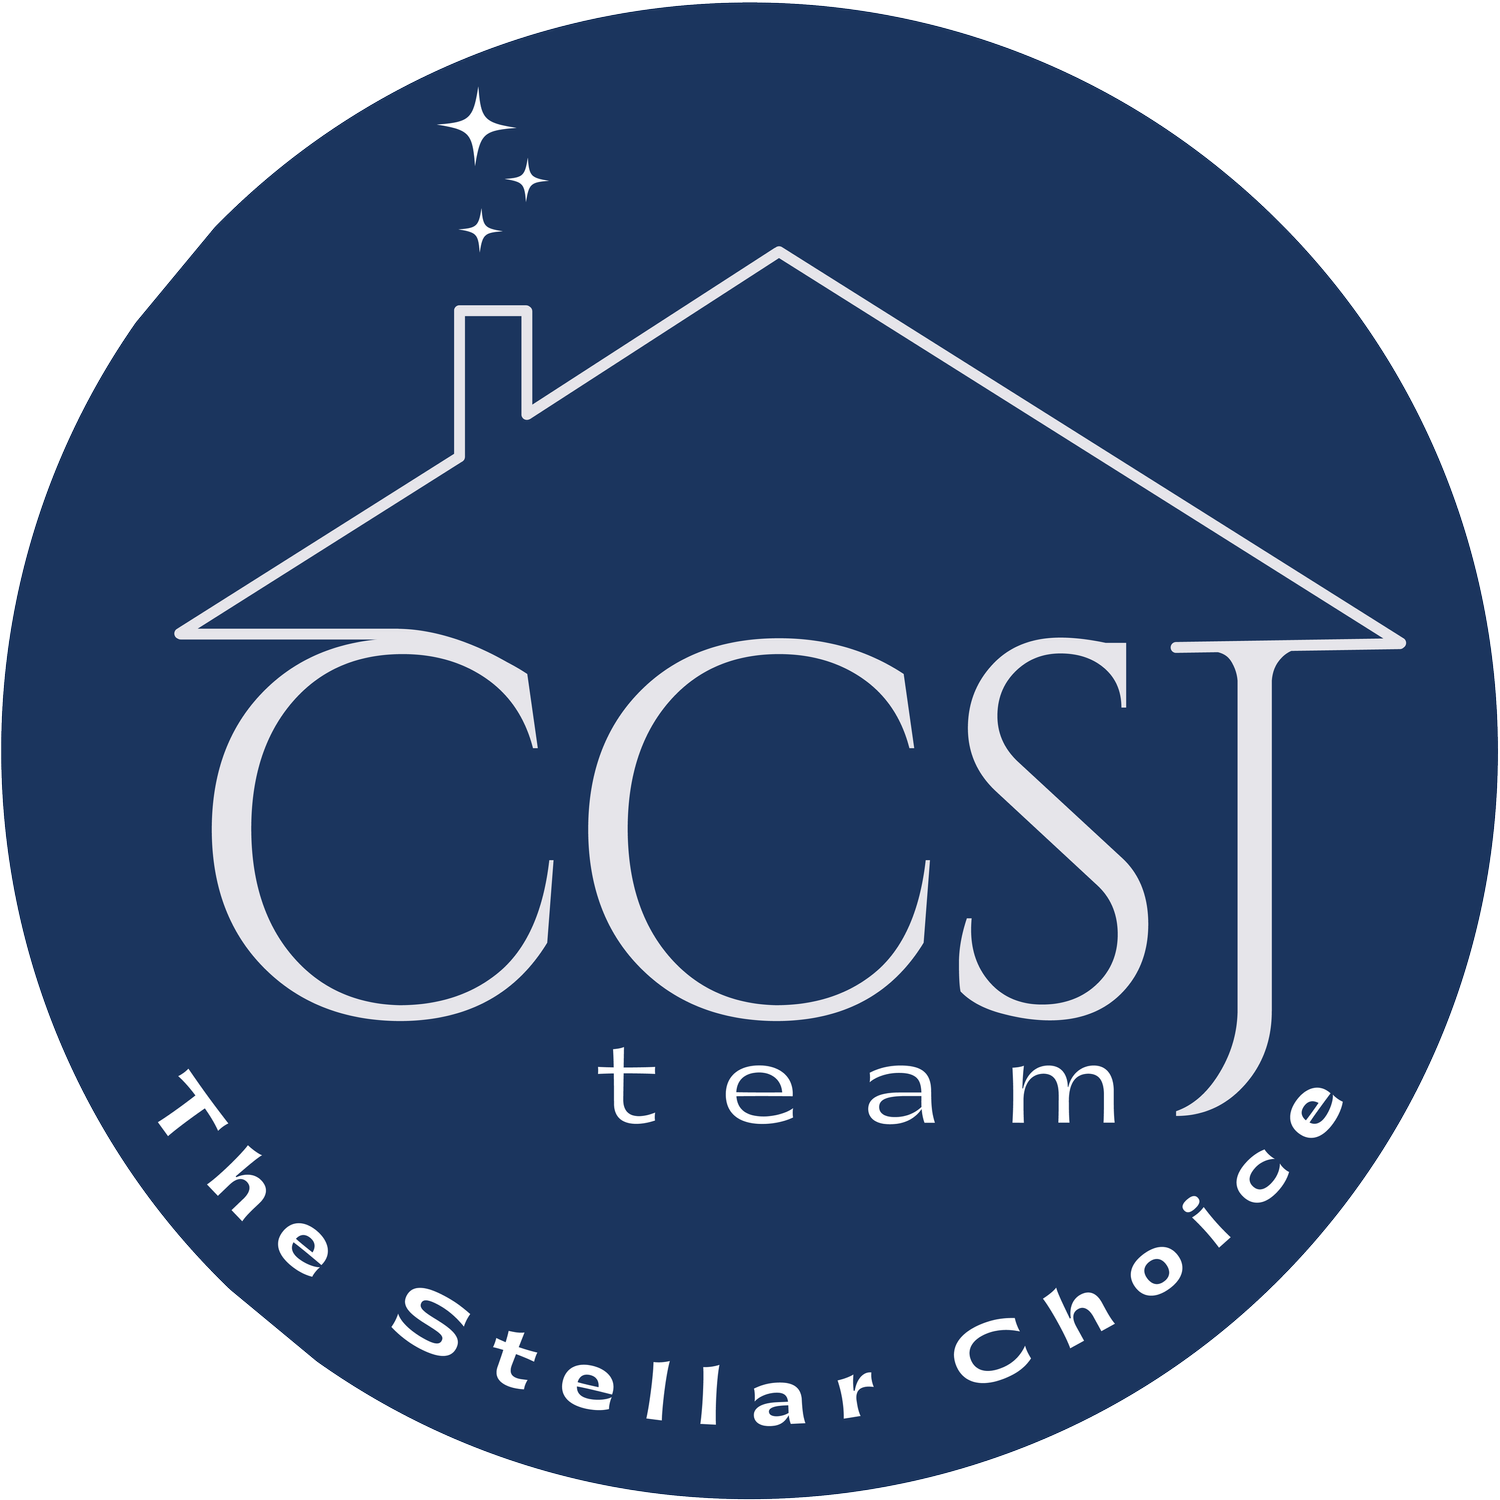 CCSJ Team